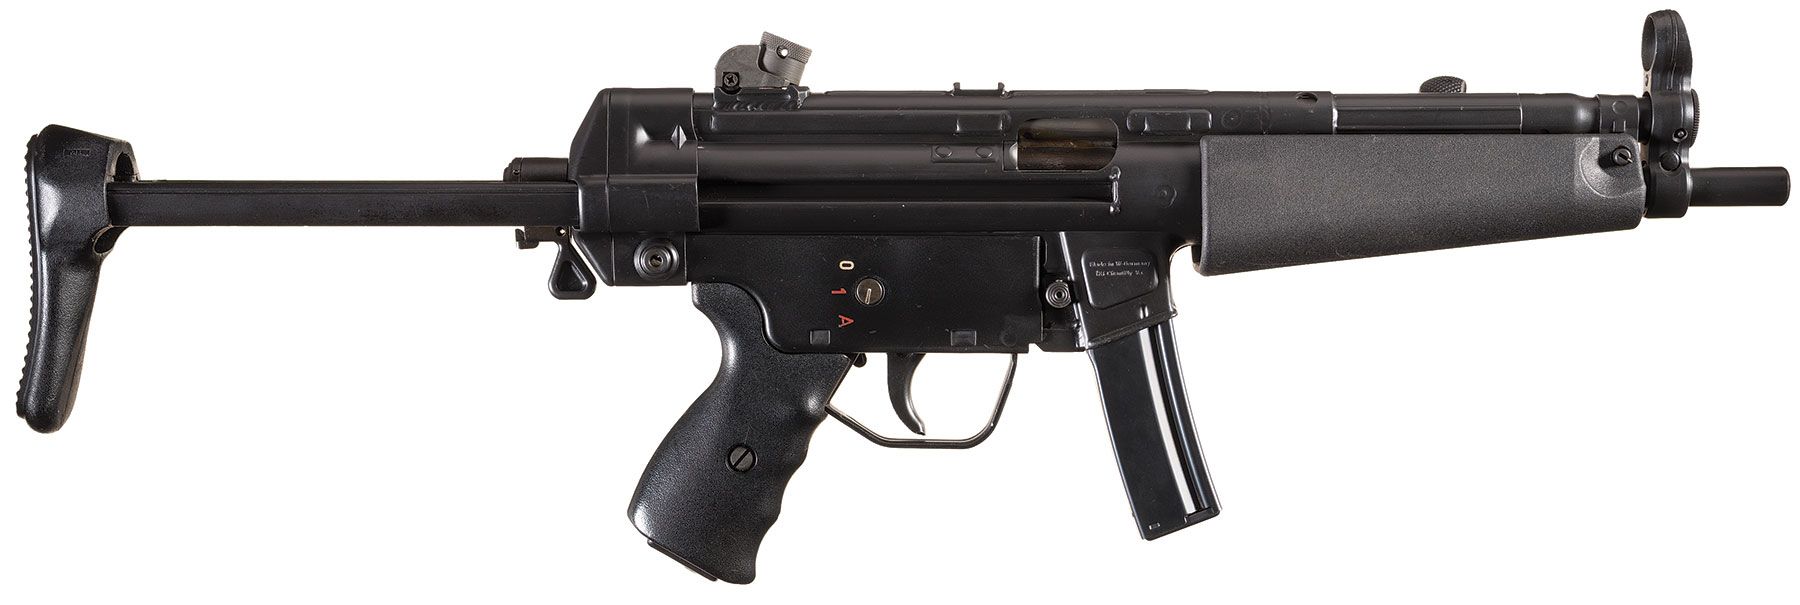 Vul in Minder dan Oneindigheid Fleming/H&K MP5 SMG, Pre-'86 Class III/NFA Machine Gun | Rock Island Auction